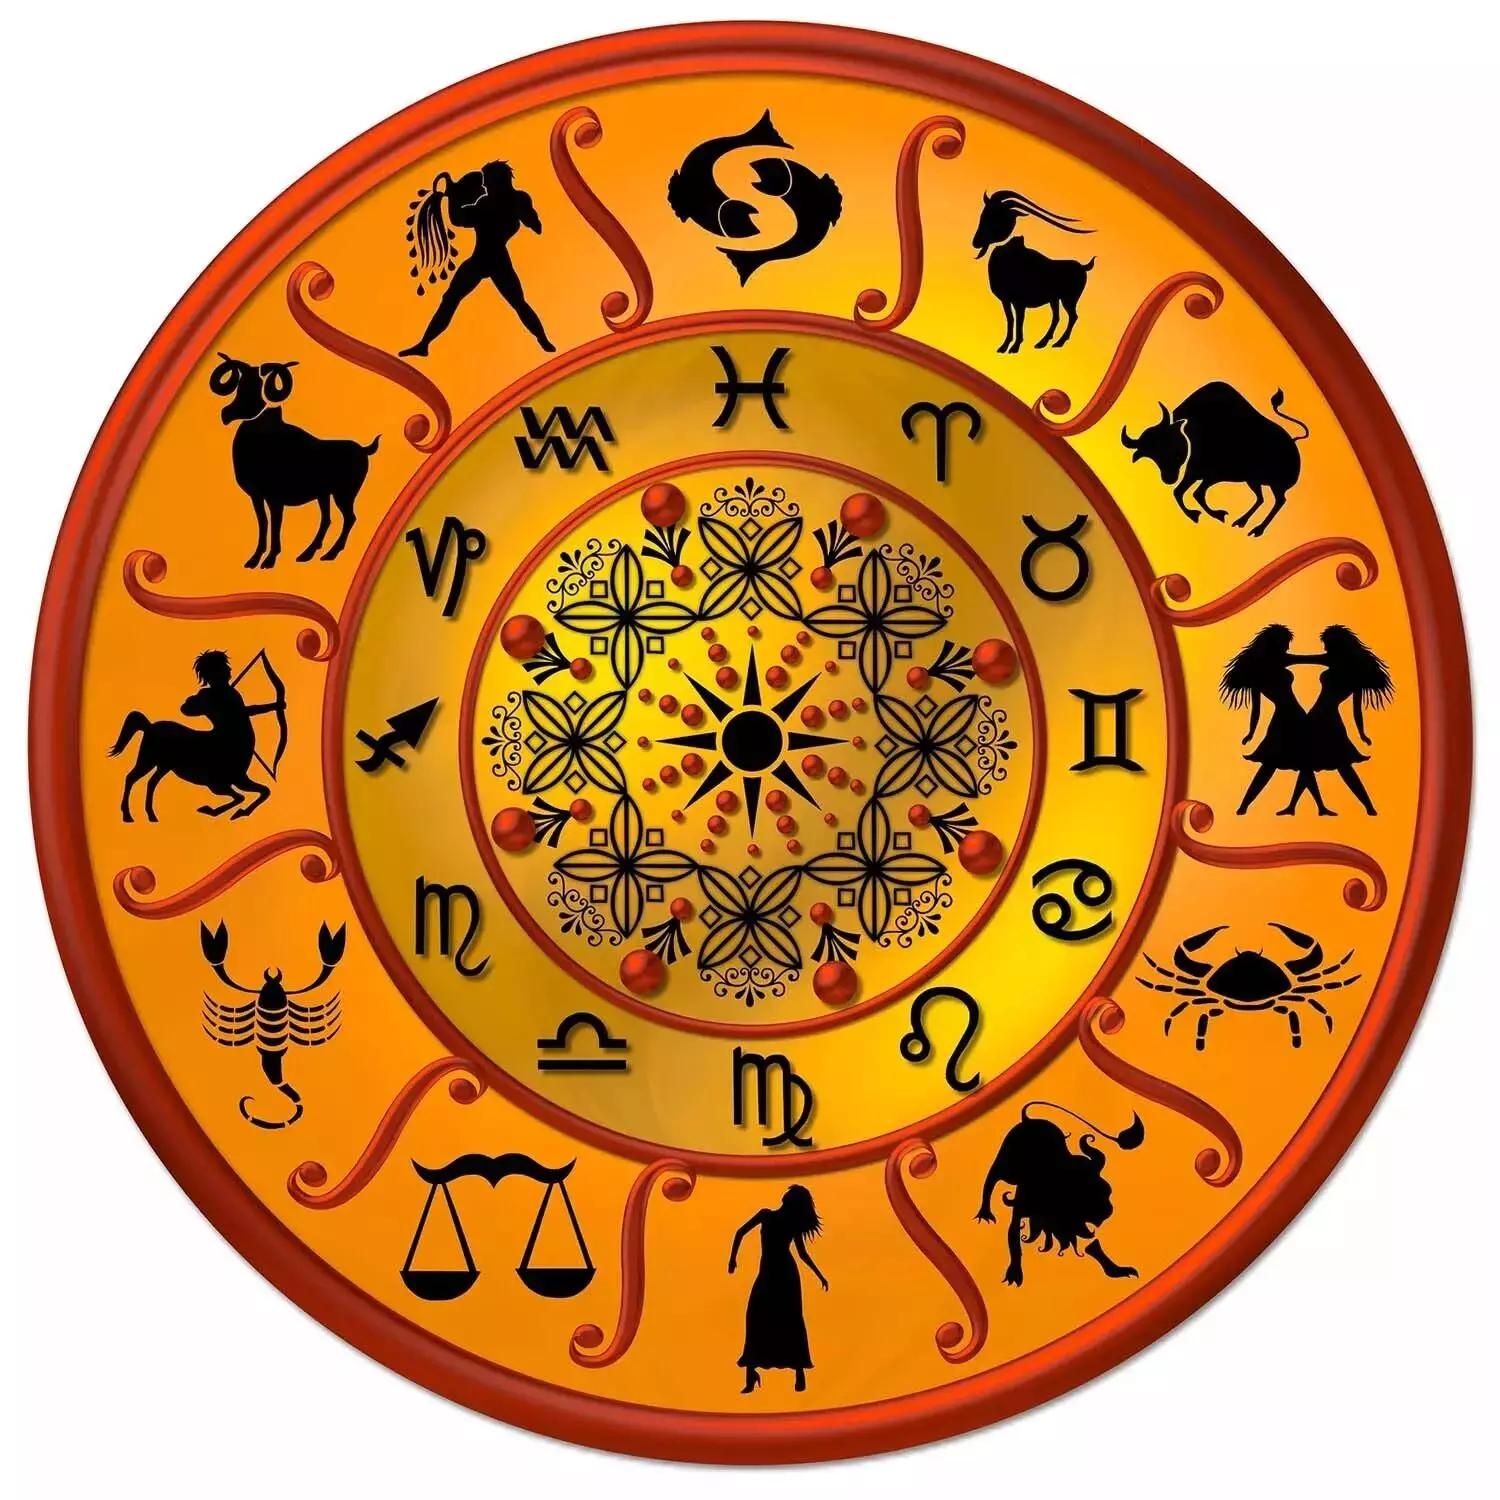 21  Novembar  – Know your todays horoscope